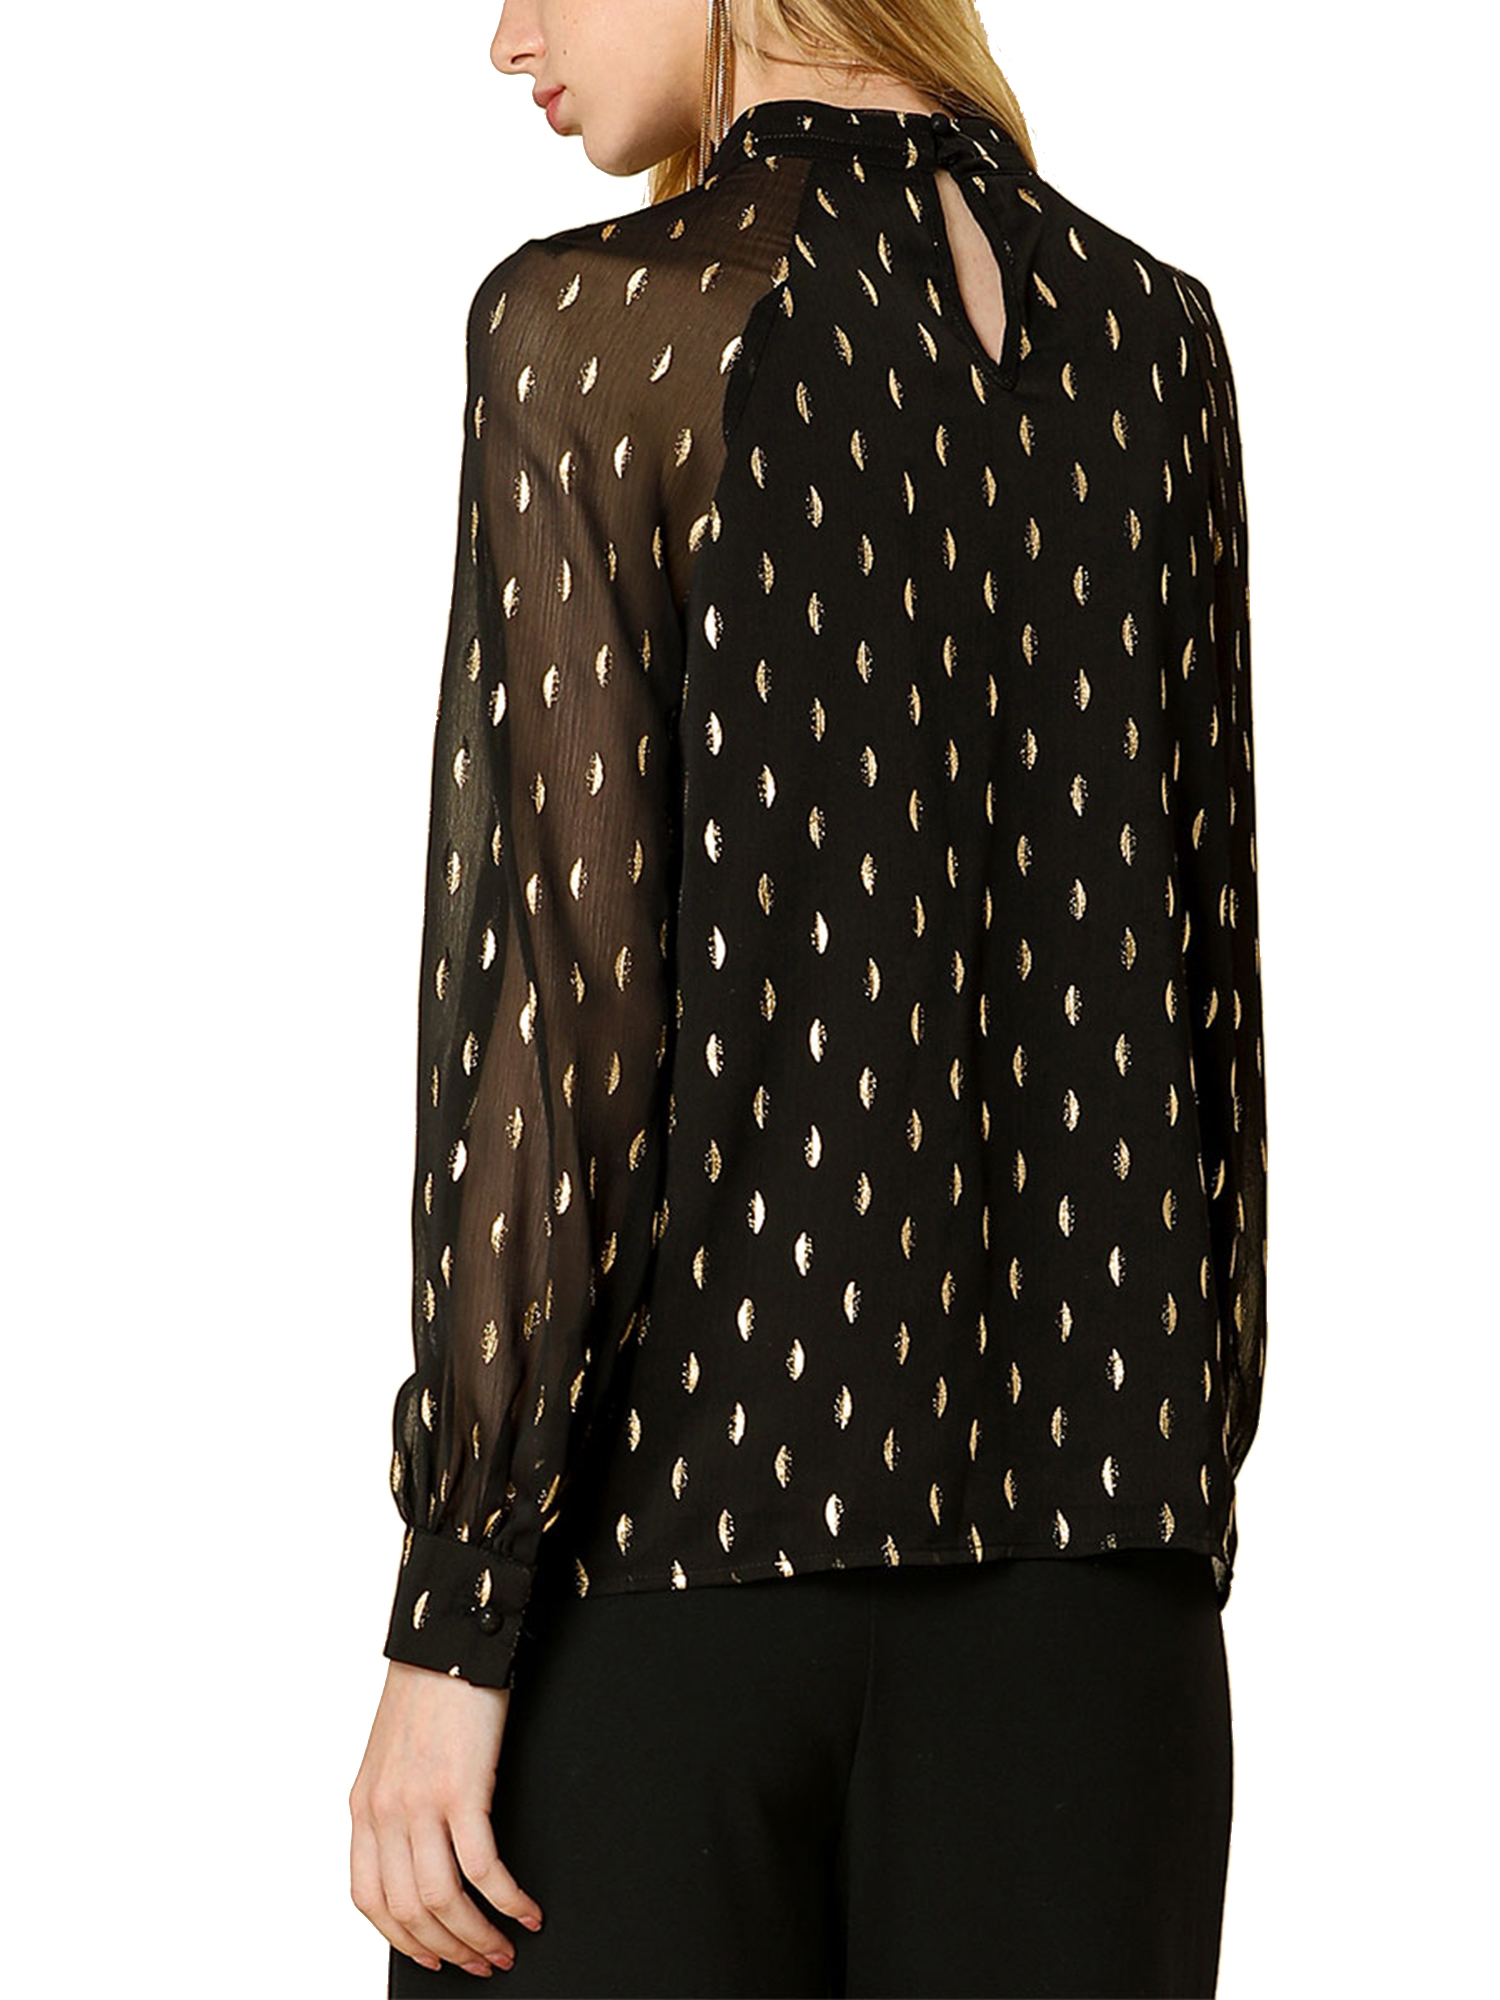 Unique Bargains Women's Cut Out Stand Collar Metallic Dots Blouses Chiffon Shirt Top - image 3 of 7